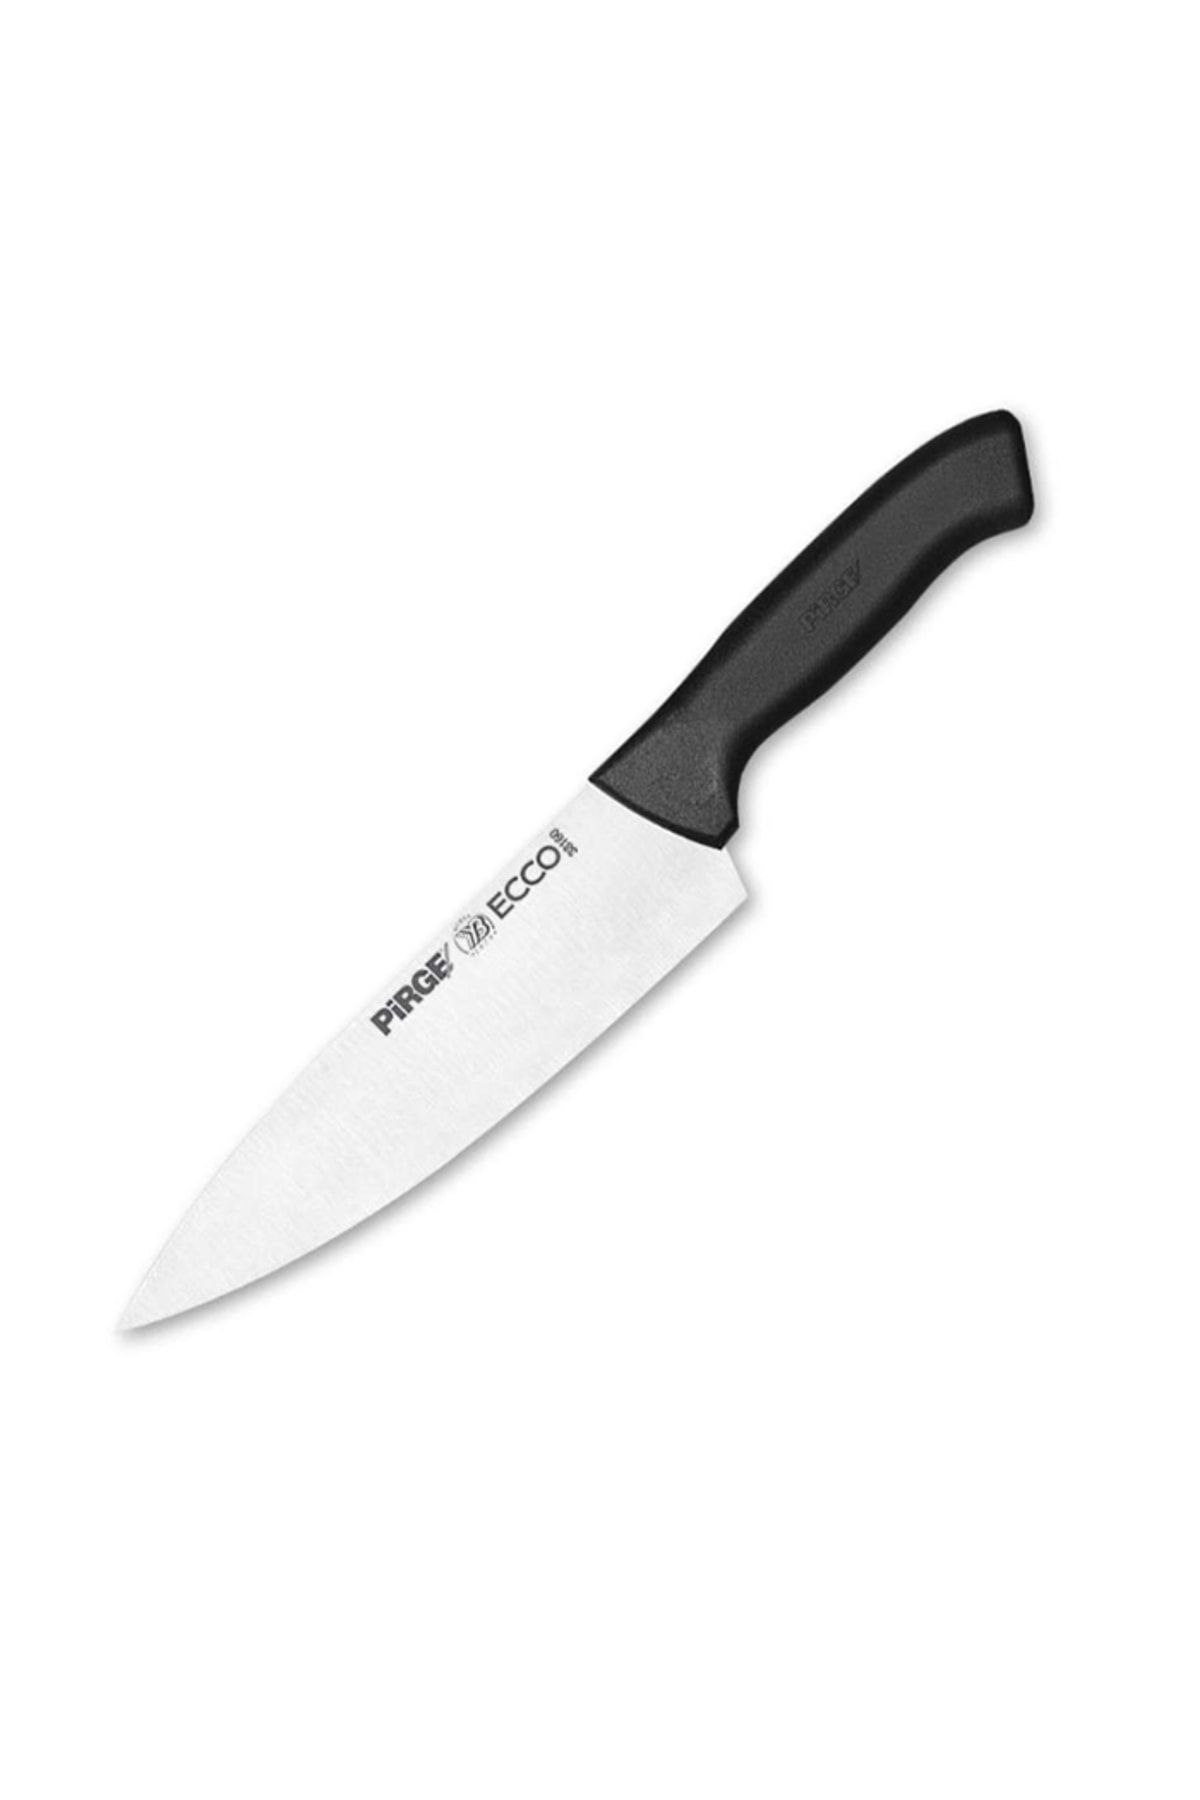 Pirge Ecco Şef Bıçağı - Siyah/19 Cm